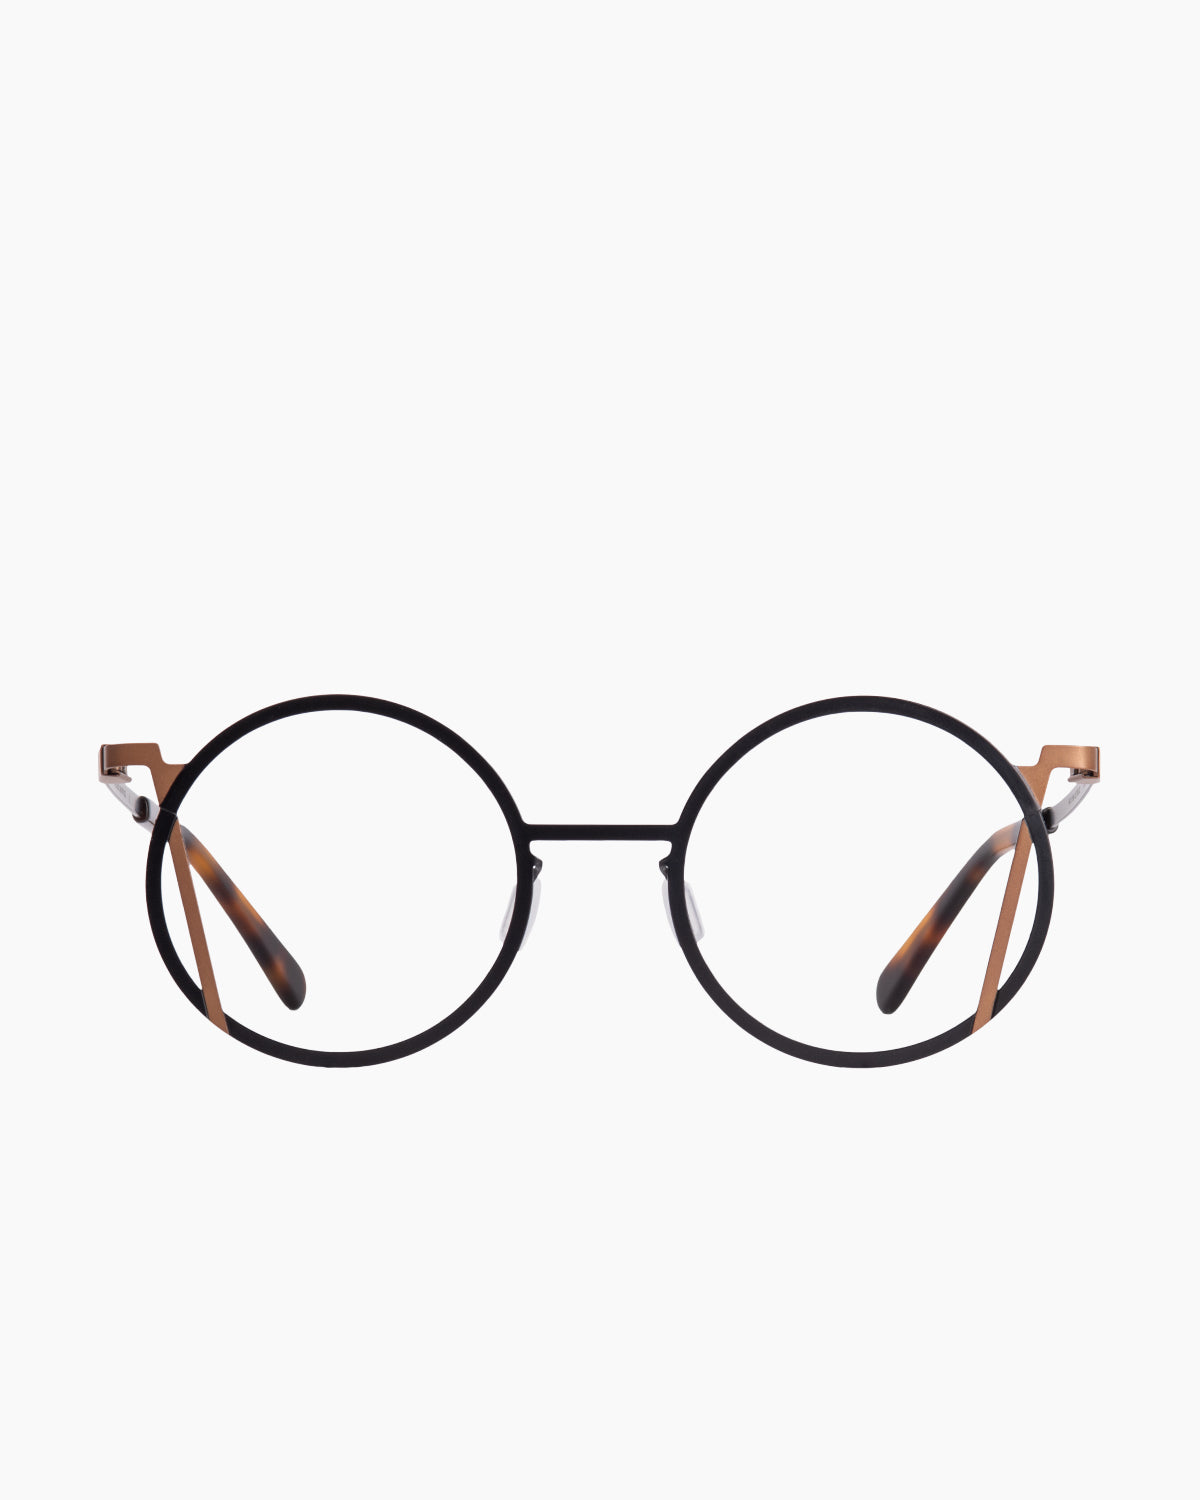 Gamine - LaRoma - Black/Copper | Bar à lunettes:  Marie-Sophie Dion